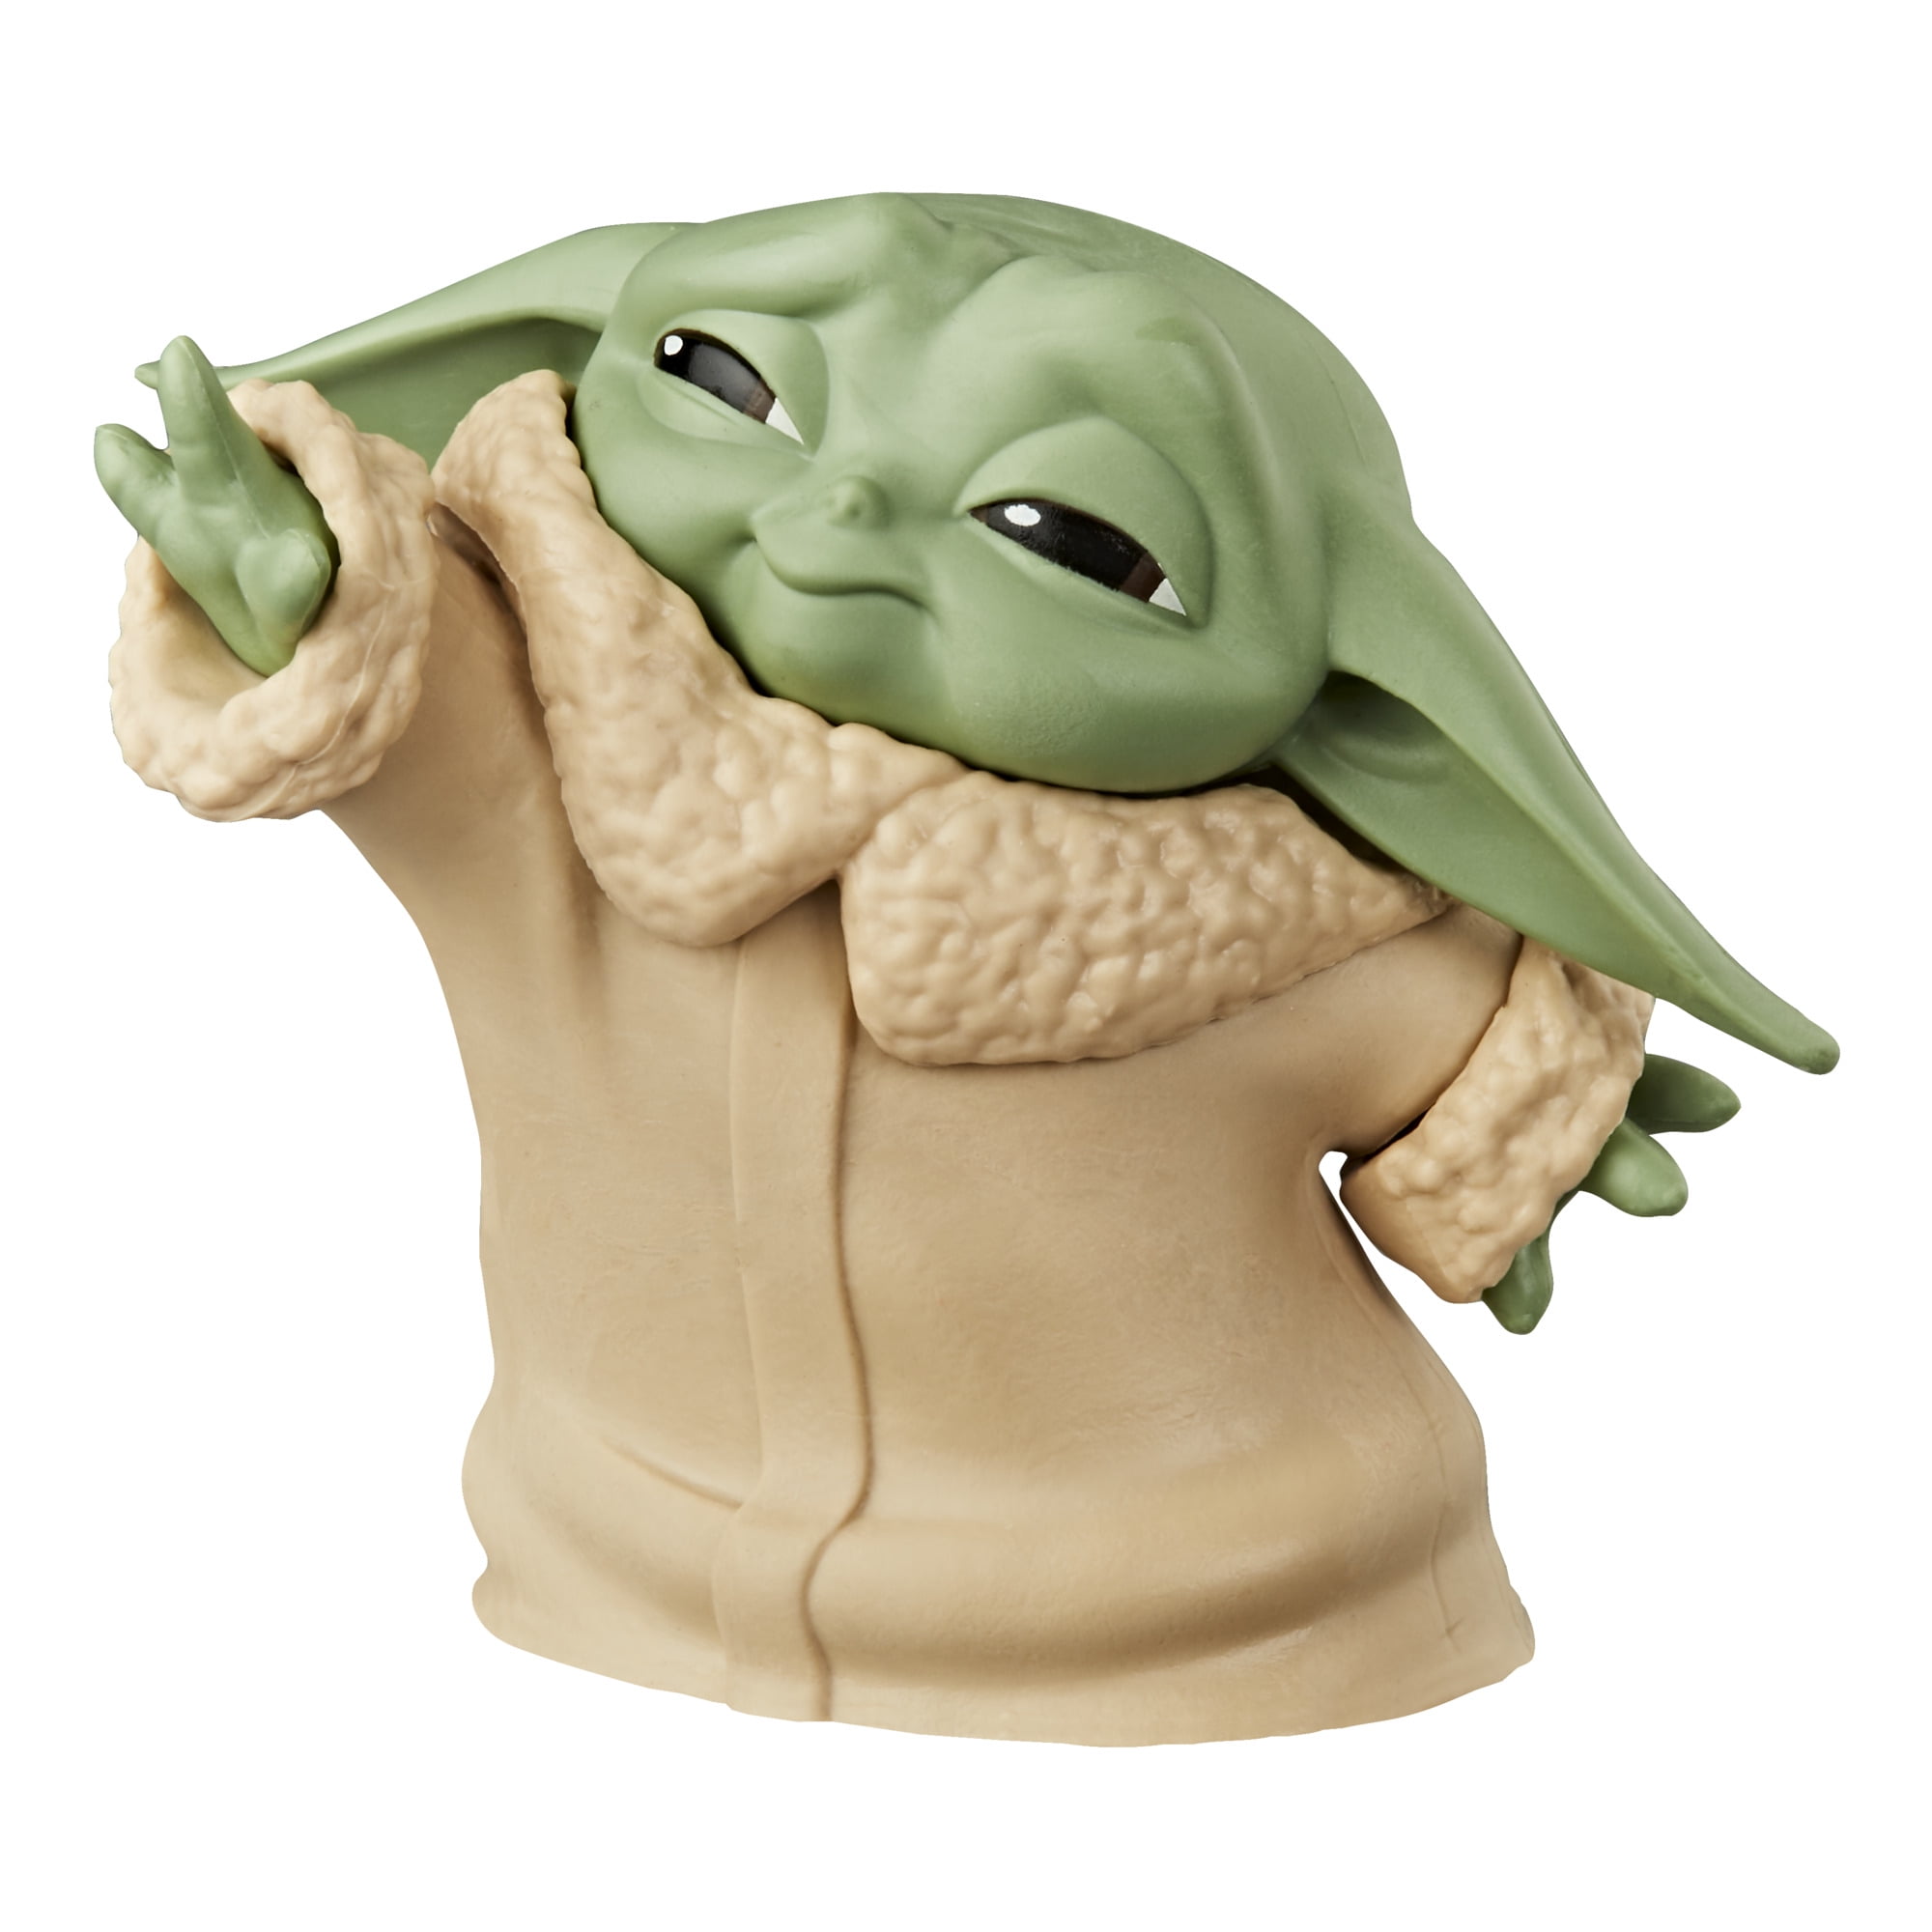 Details about   Baby Yoda Star Wars Mini Action Figure Mandalorian Series Jedi Master 5pcs Toys 